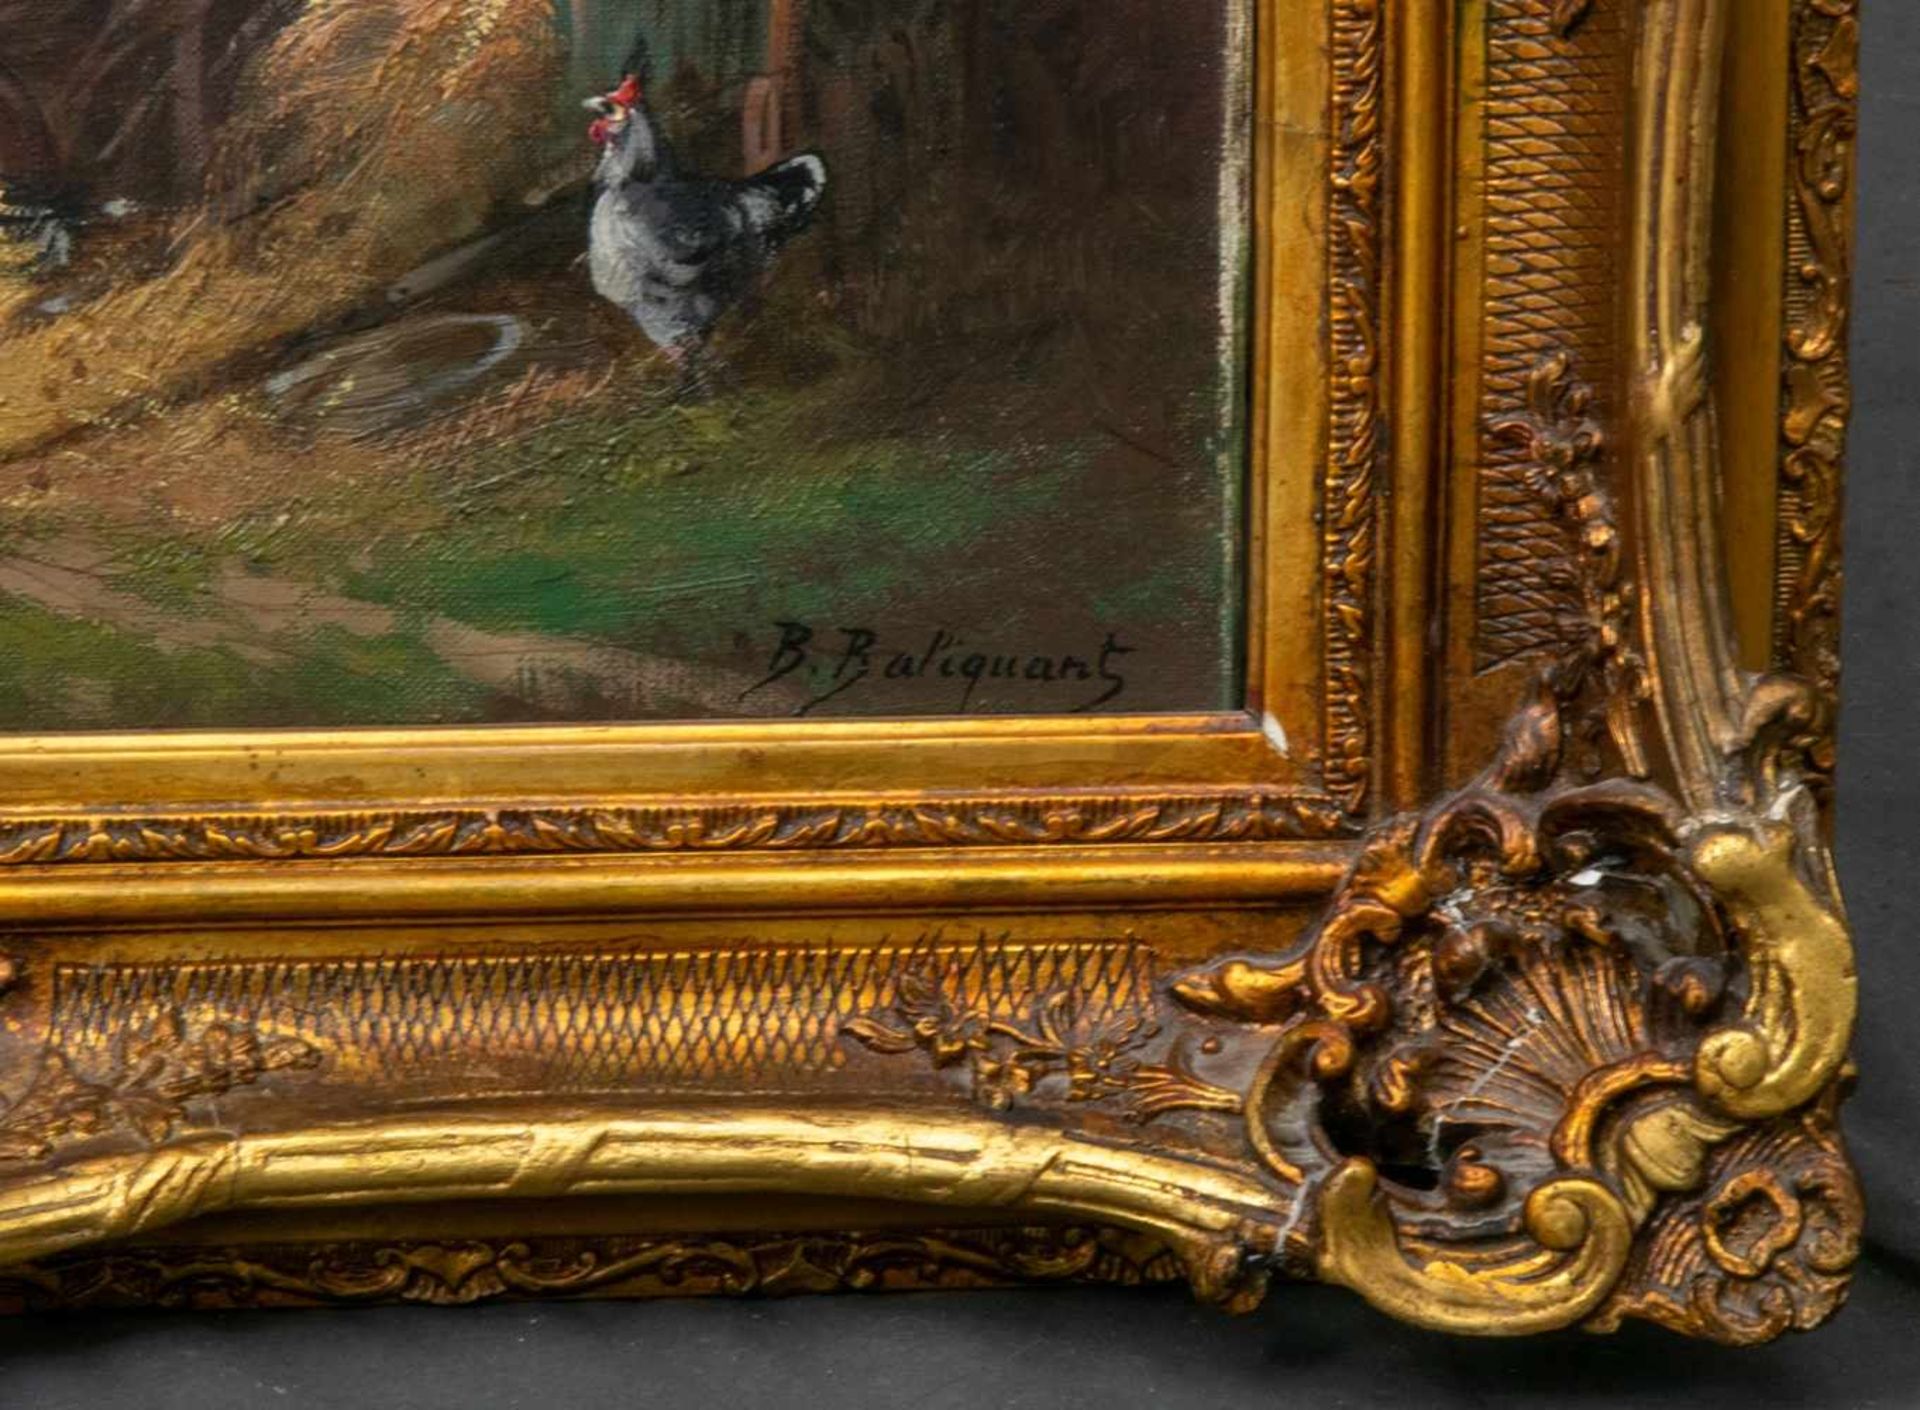 "Hühnerstall", Gemälde, Öl auf Leinwand, ca. 46 x 55 cm, signiert "B. Baliguant", prächtiger - Image 5 of 6